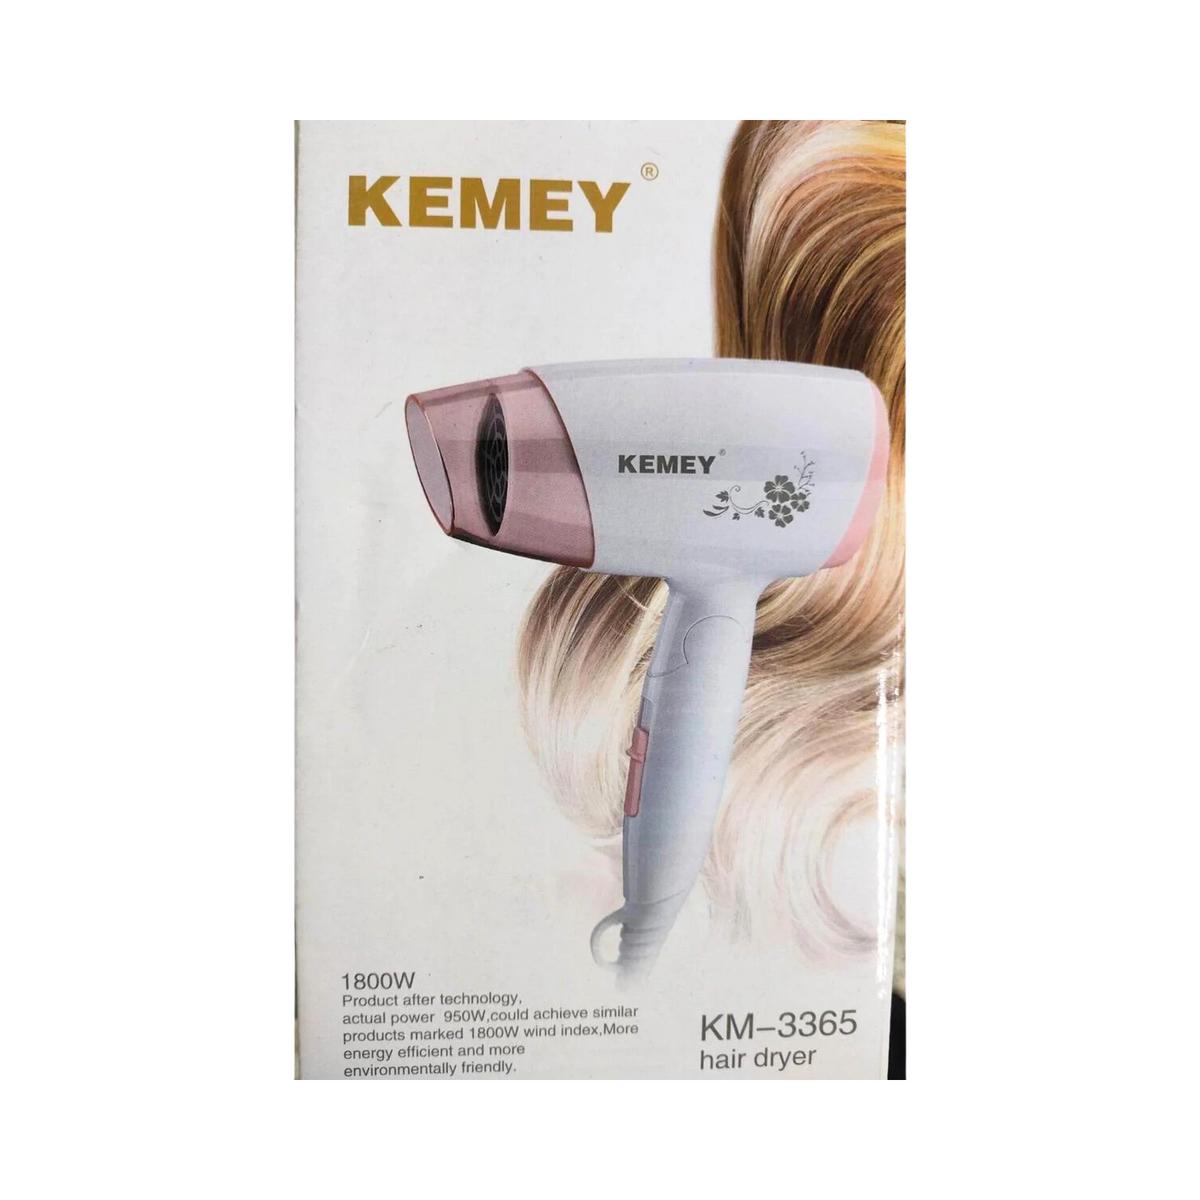 kemey-km-3365-professional-hair-dryer